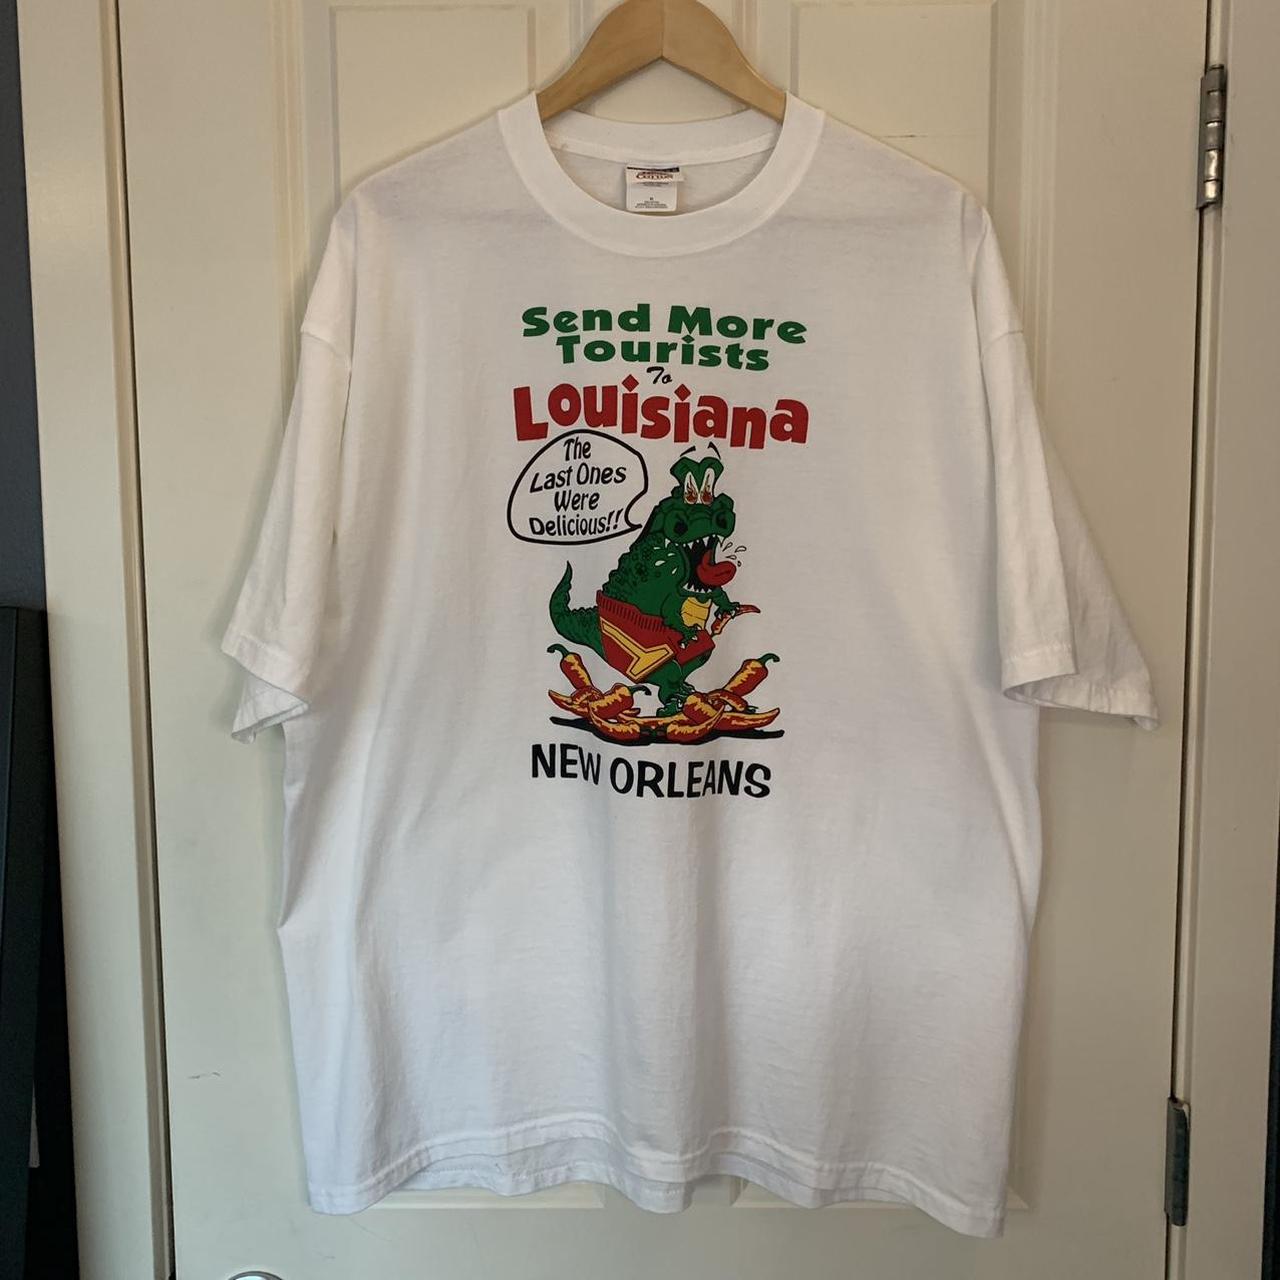 Retro State of Louisiana T-Shirt - White, M